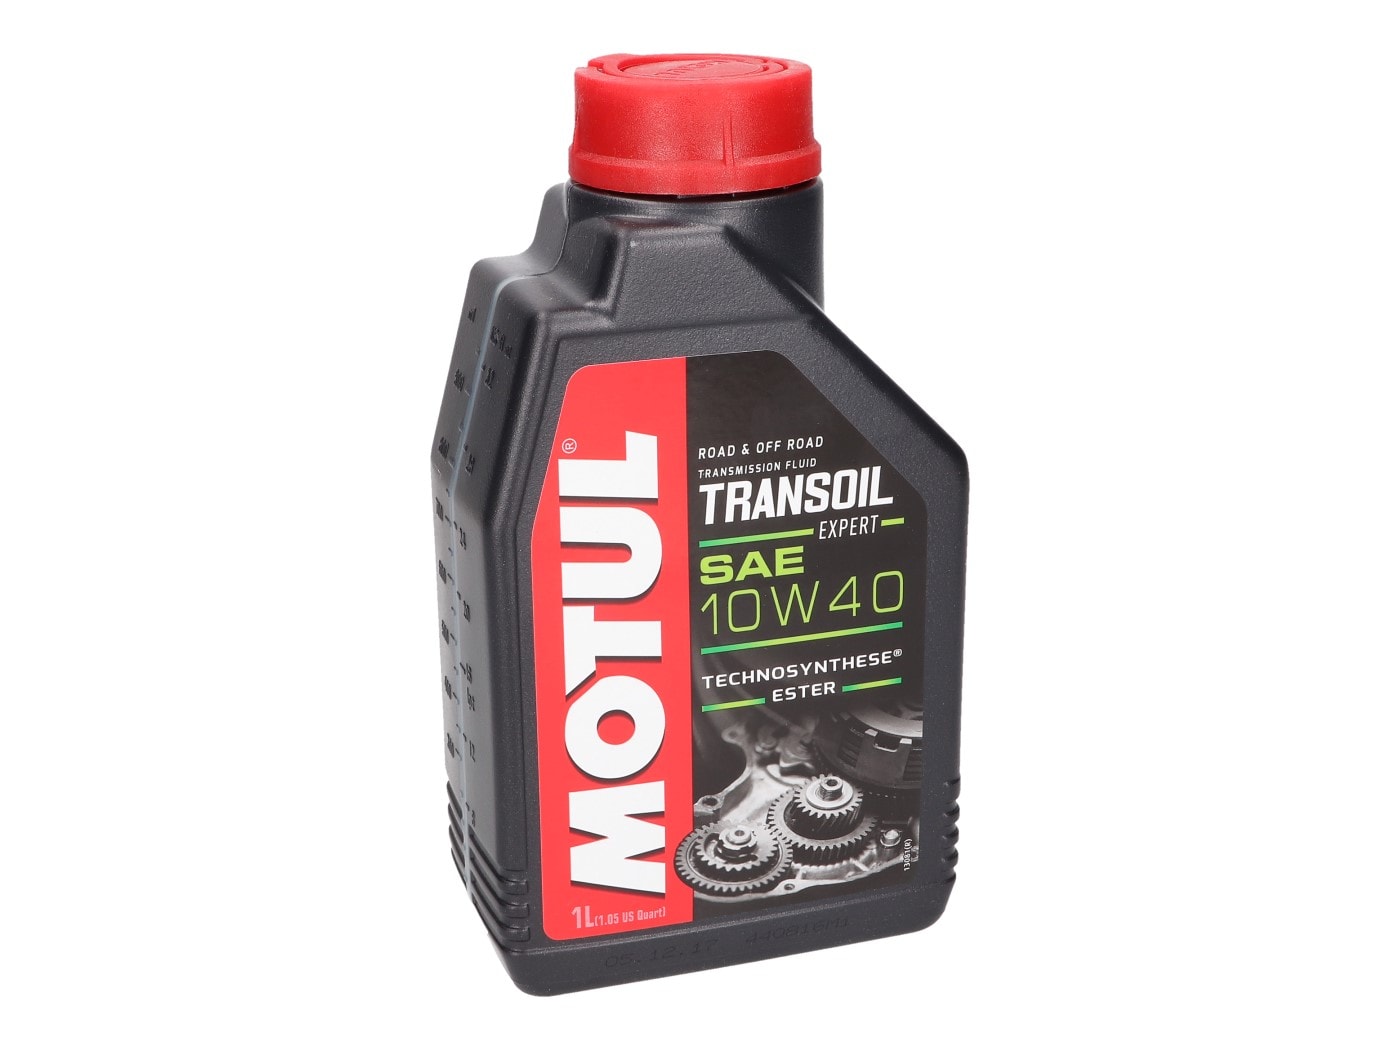 MOTUL Transoil Expert - 10W40